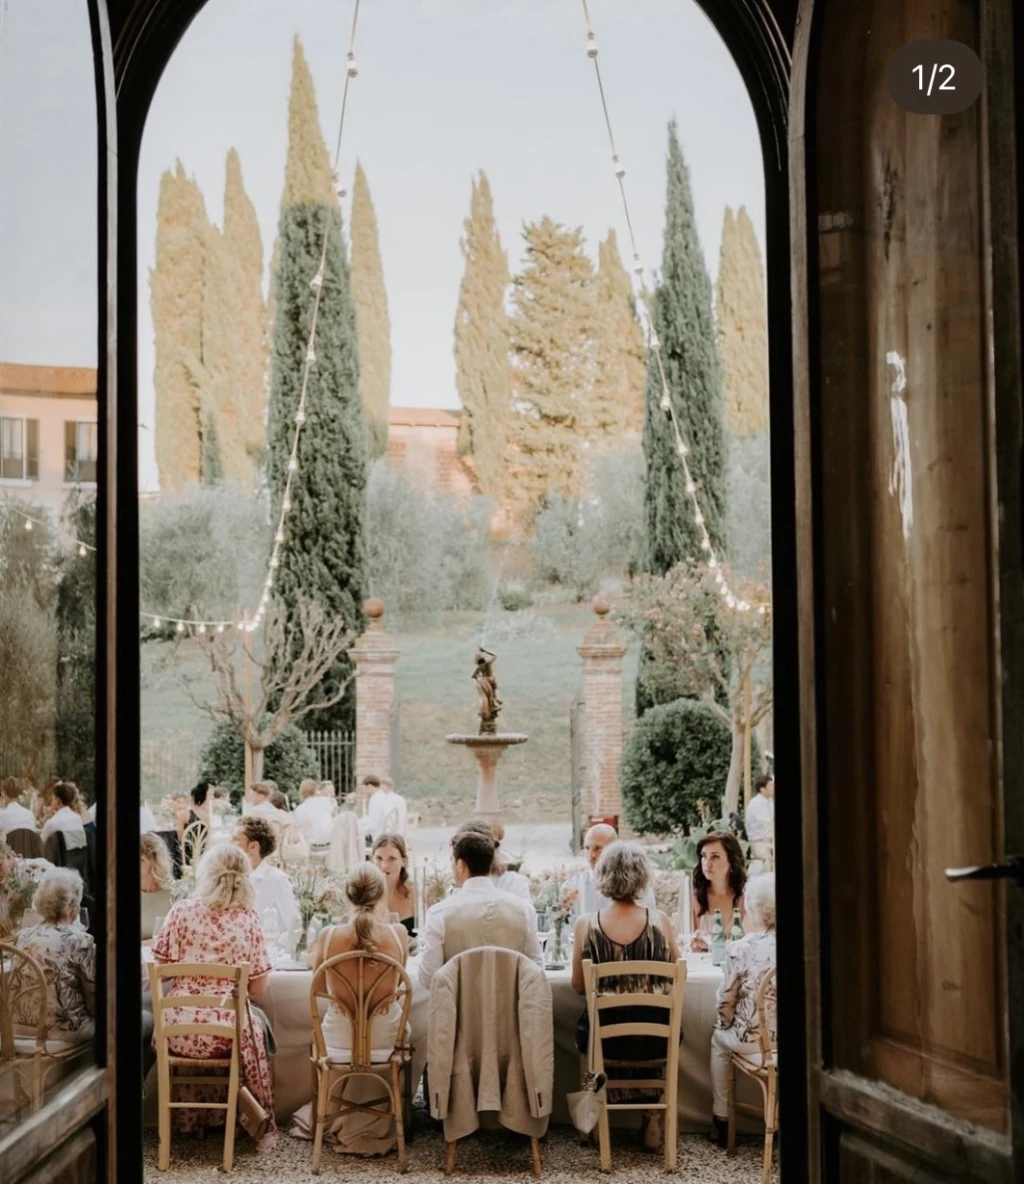 The ultimate wedding venue in a historic villa in Tuscany